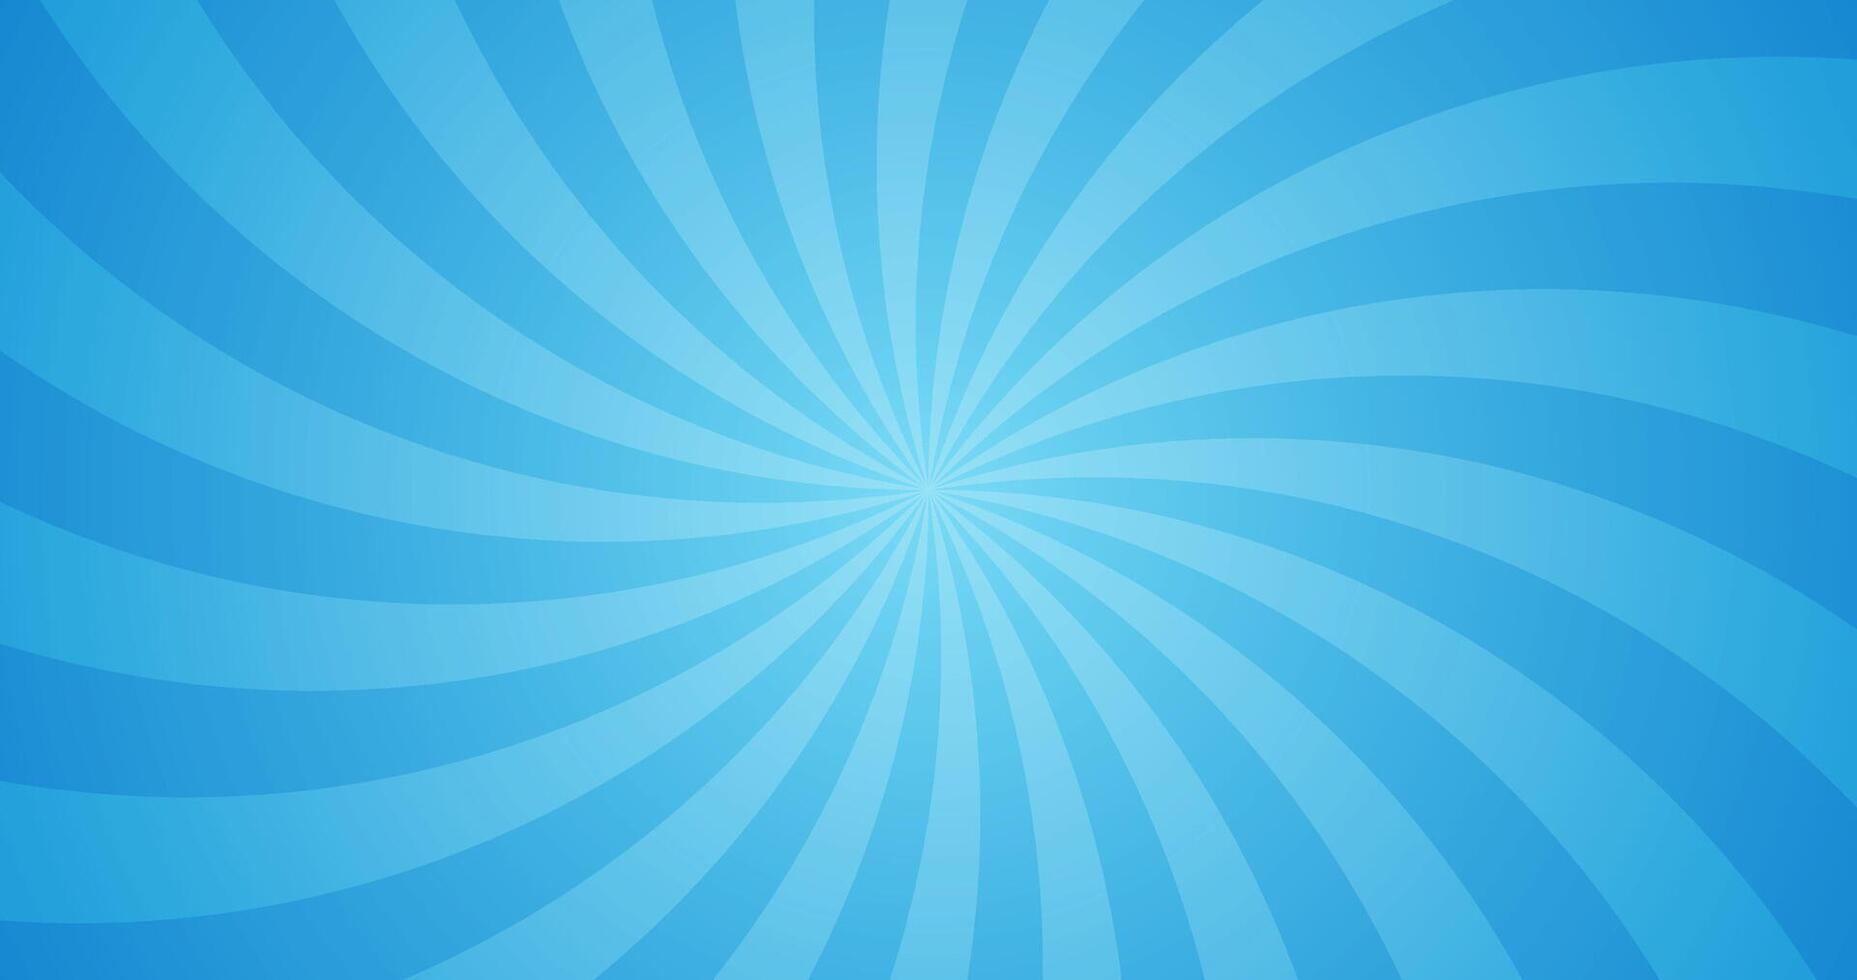 Simple Gradient Groovy Rays Of Comic Style Blue Swirl Sunburst Effect In Blank Horizontal Plain Background vector